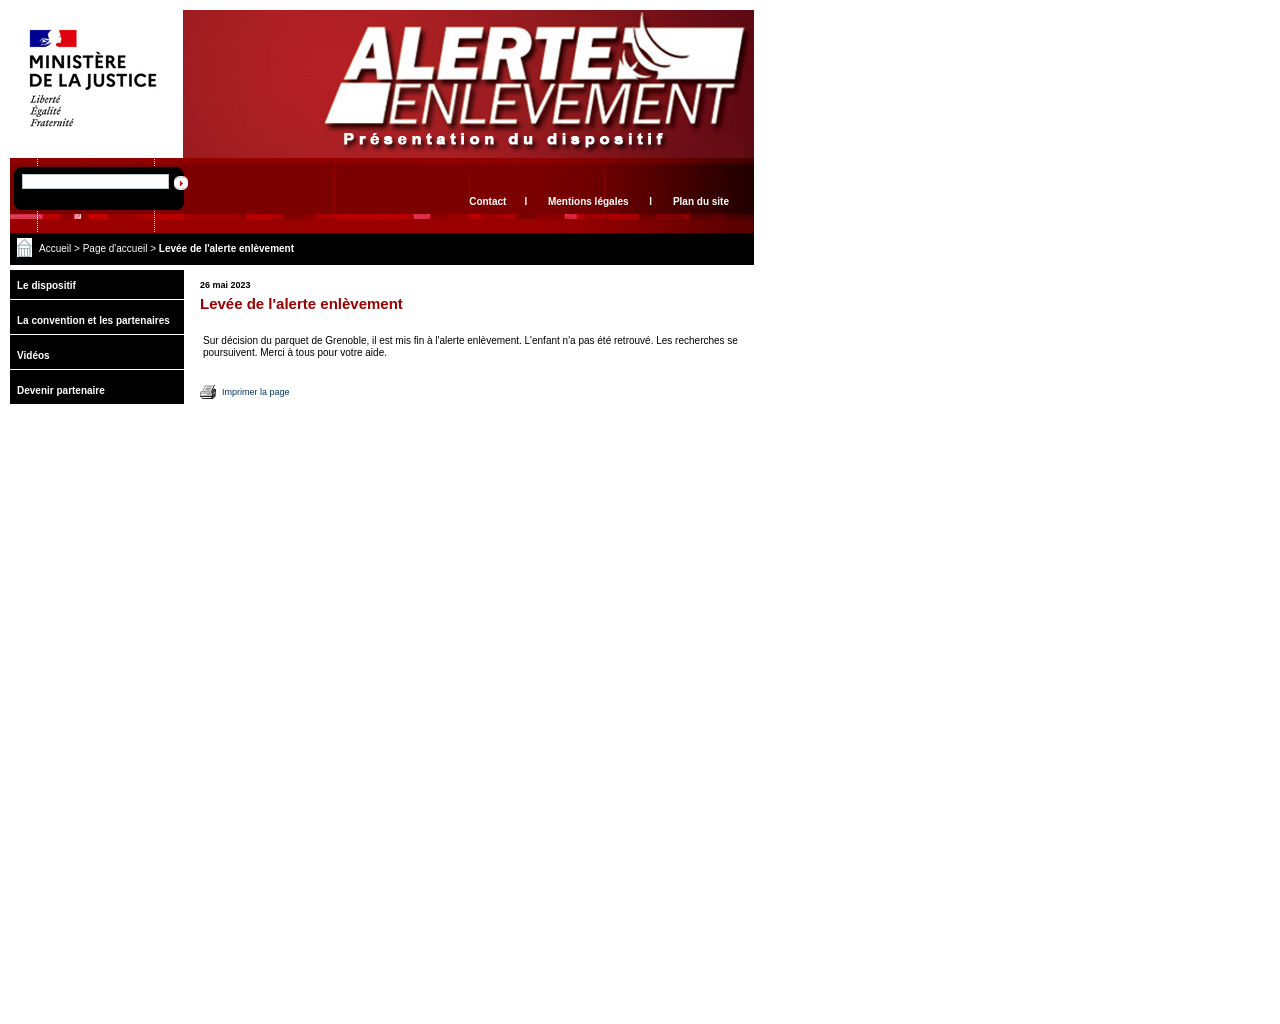 www.alerte-enlevement.gouv.fr